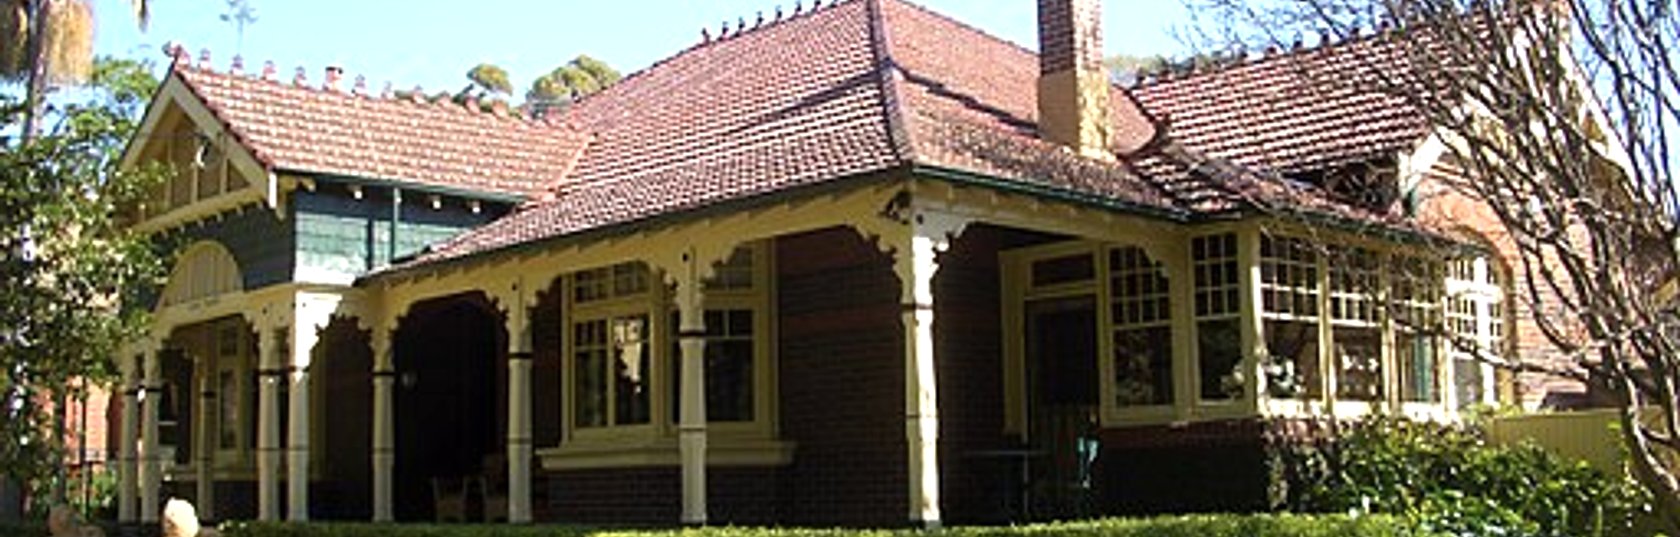 Federation and Queenslander Homes